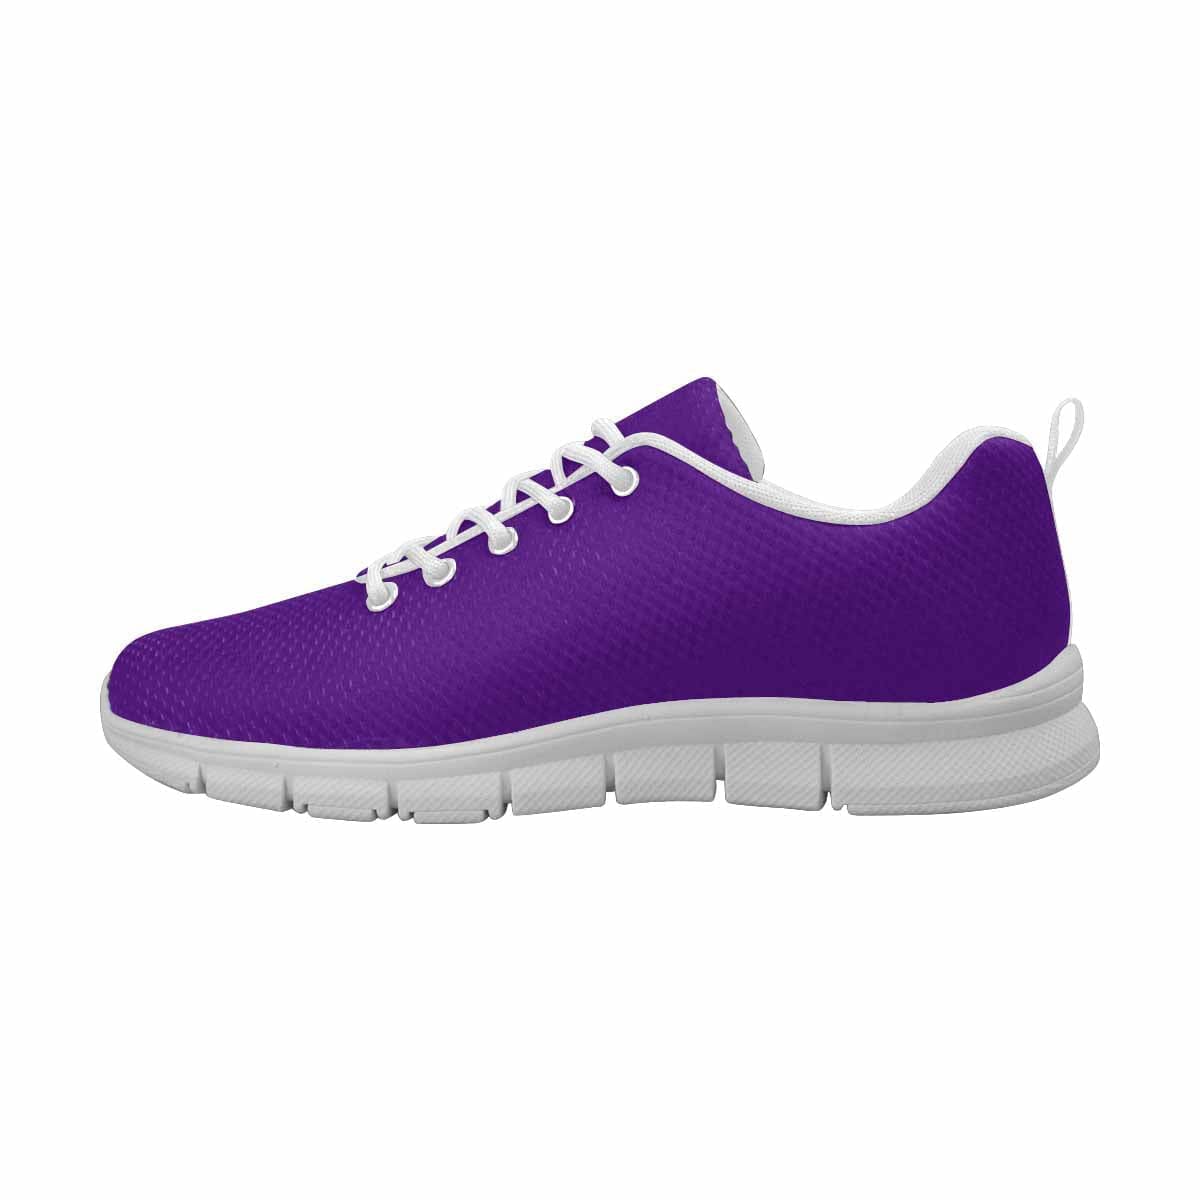 Sneakers For Men Indigo Purple - Running Shoes - Mens | Sneakers | Running